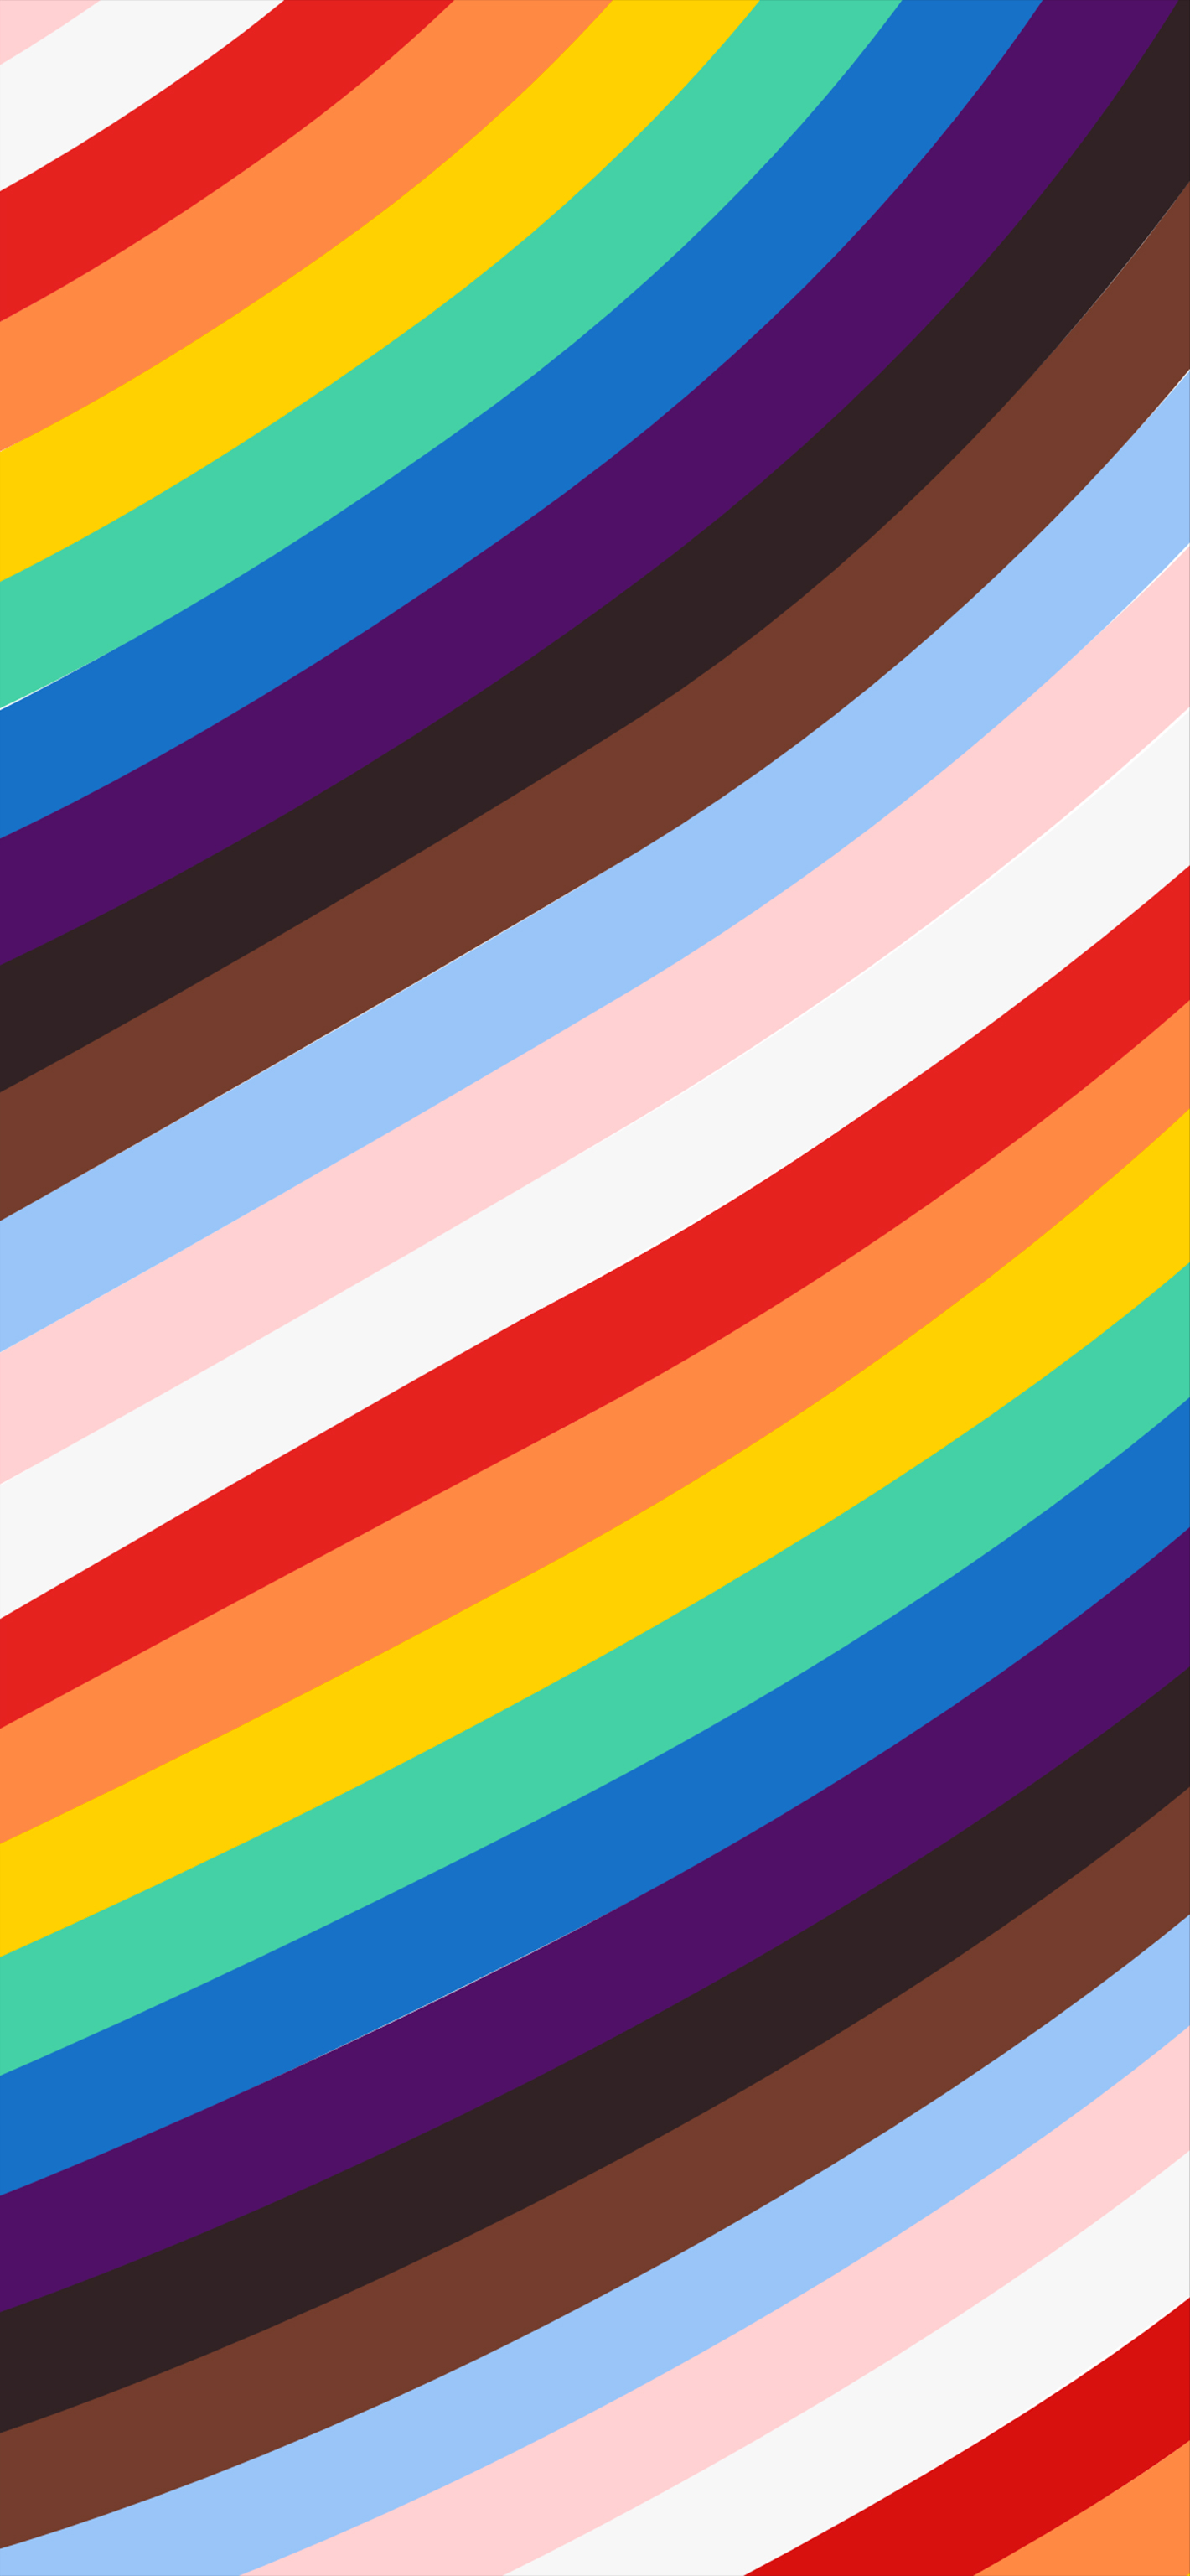 Rainbow Stripes Images  Free Download on Freepik